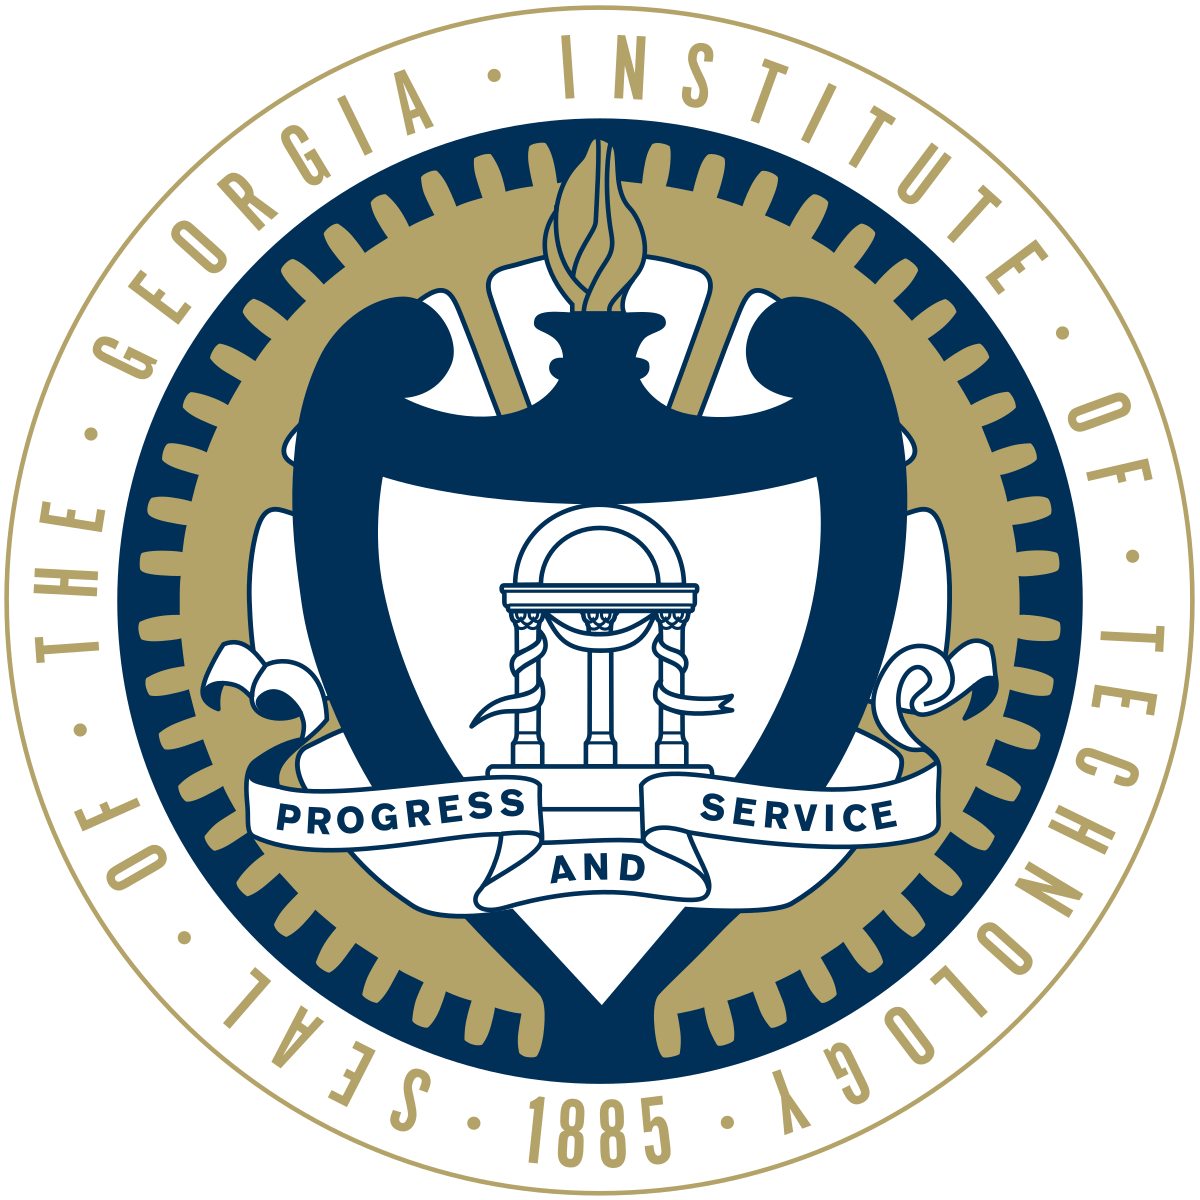 Georgia Tech Logo - Georgia Institute of Technology